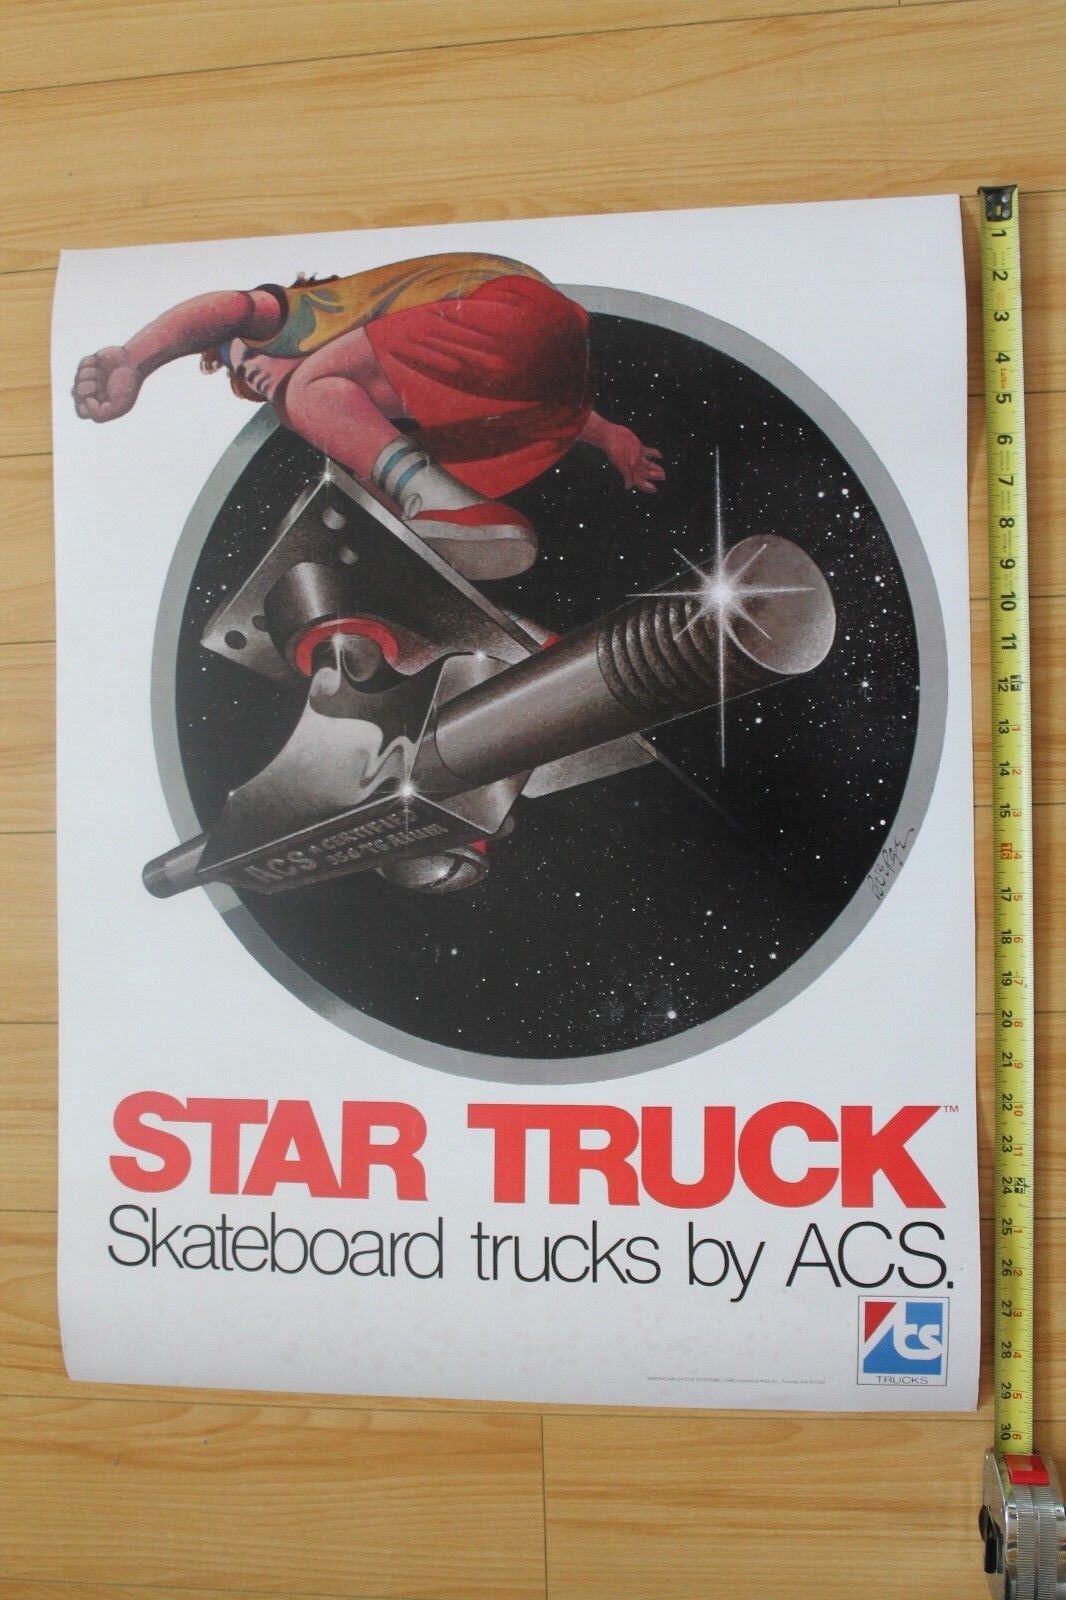 Indianapolis Mall ACS Skateboard Trucks Star Truck Reprint 24x Skateboarding Boston Mall Retro